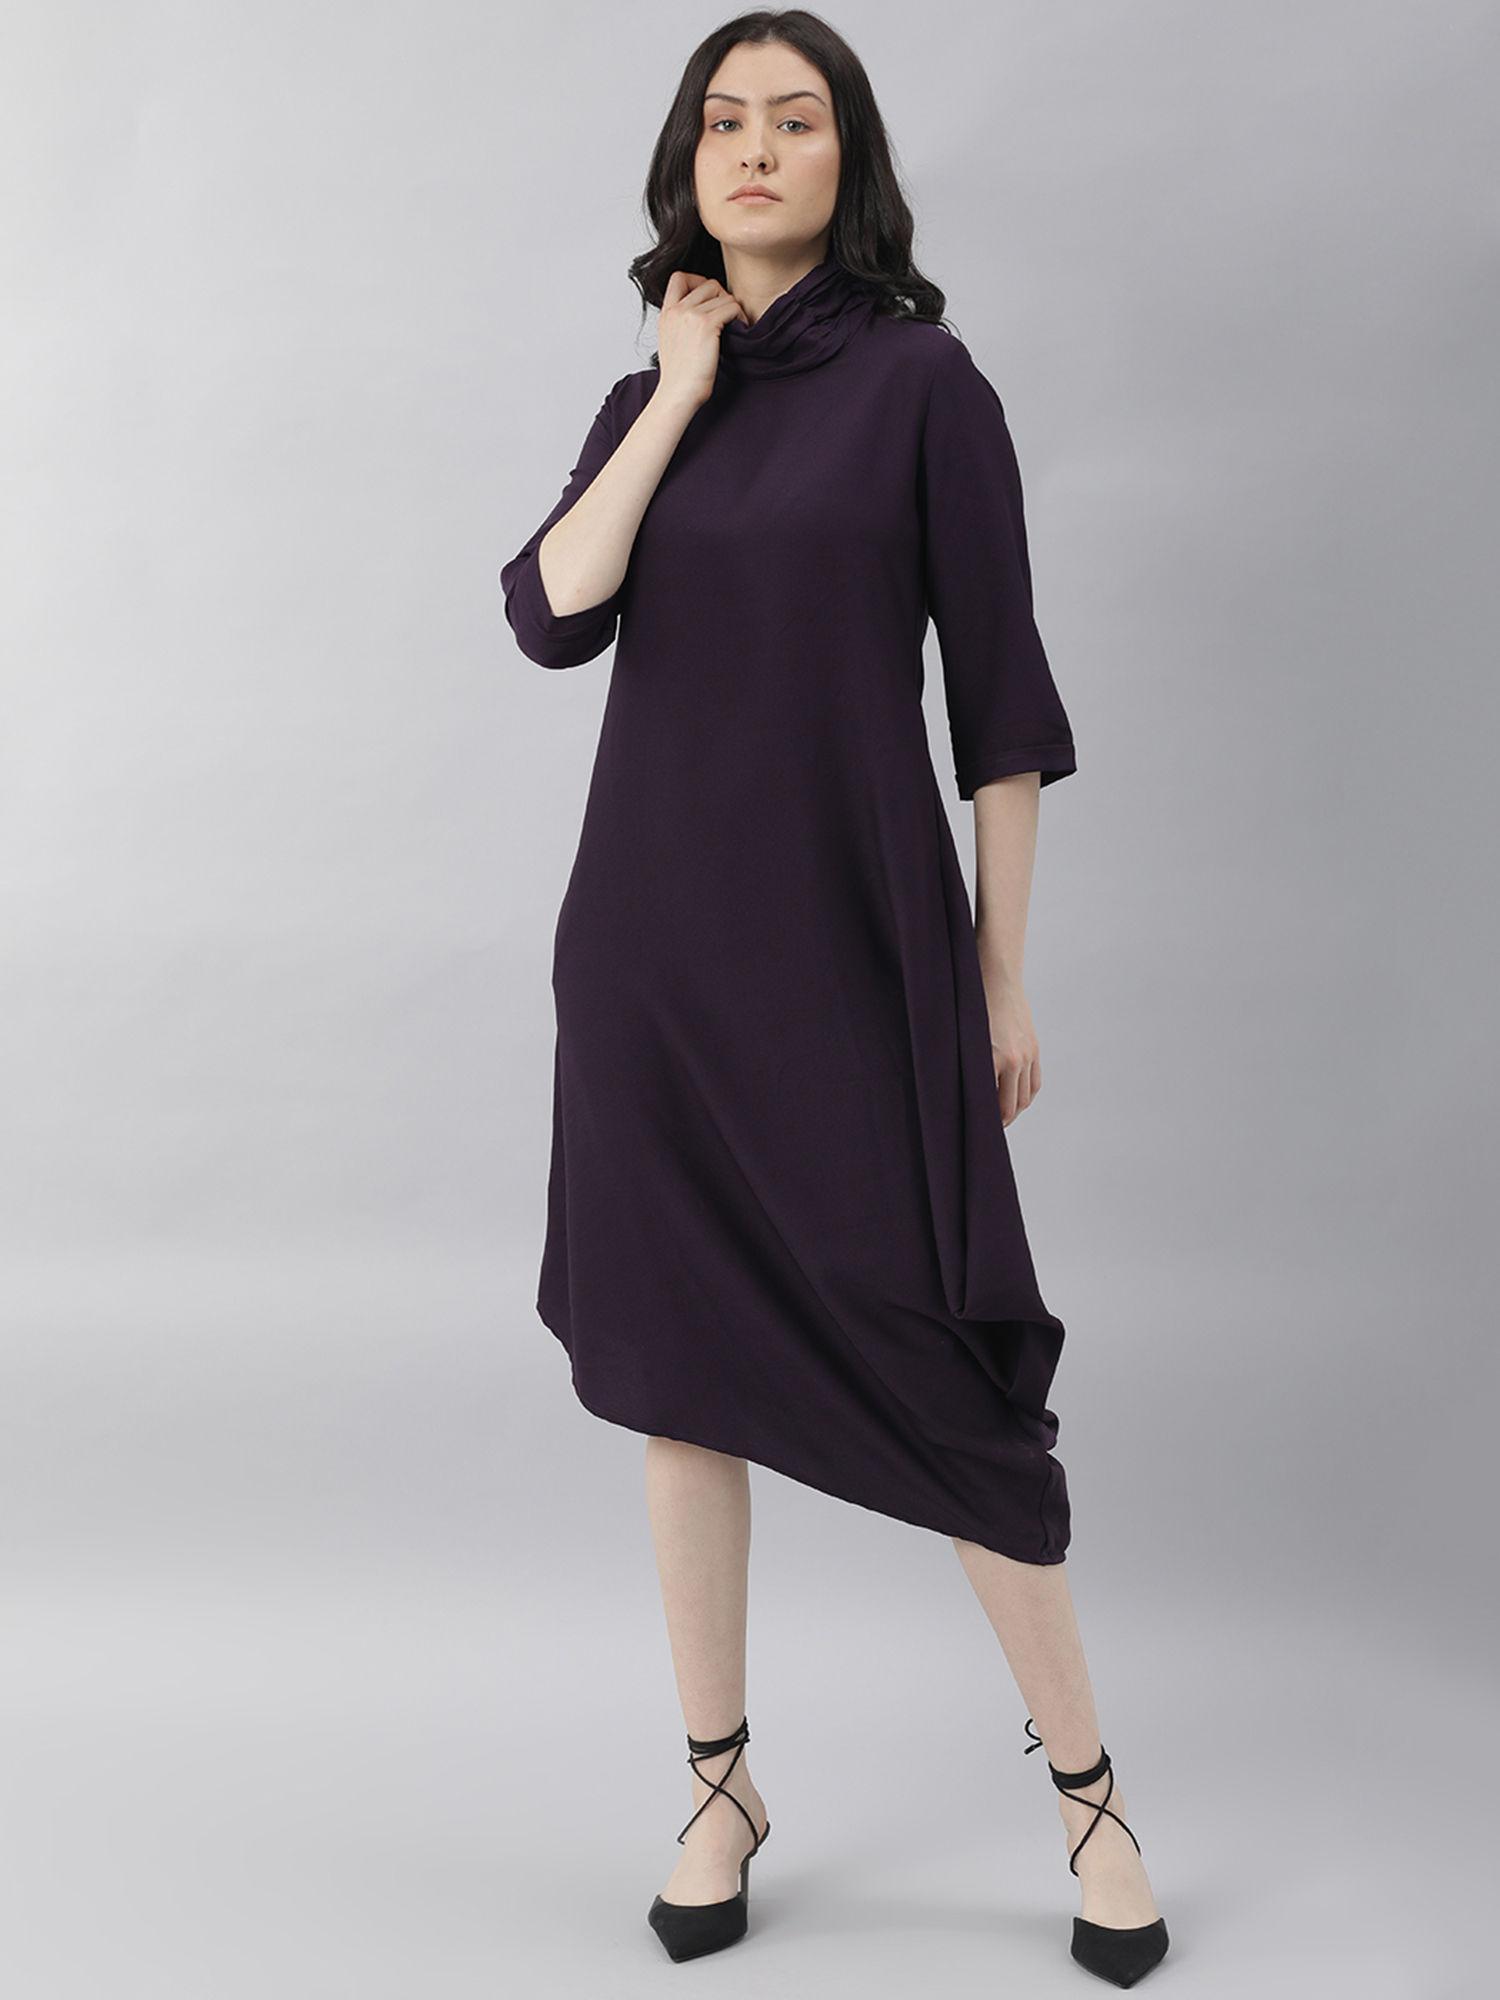 sullivan purple dress